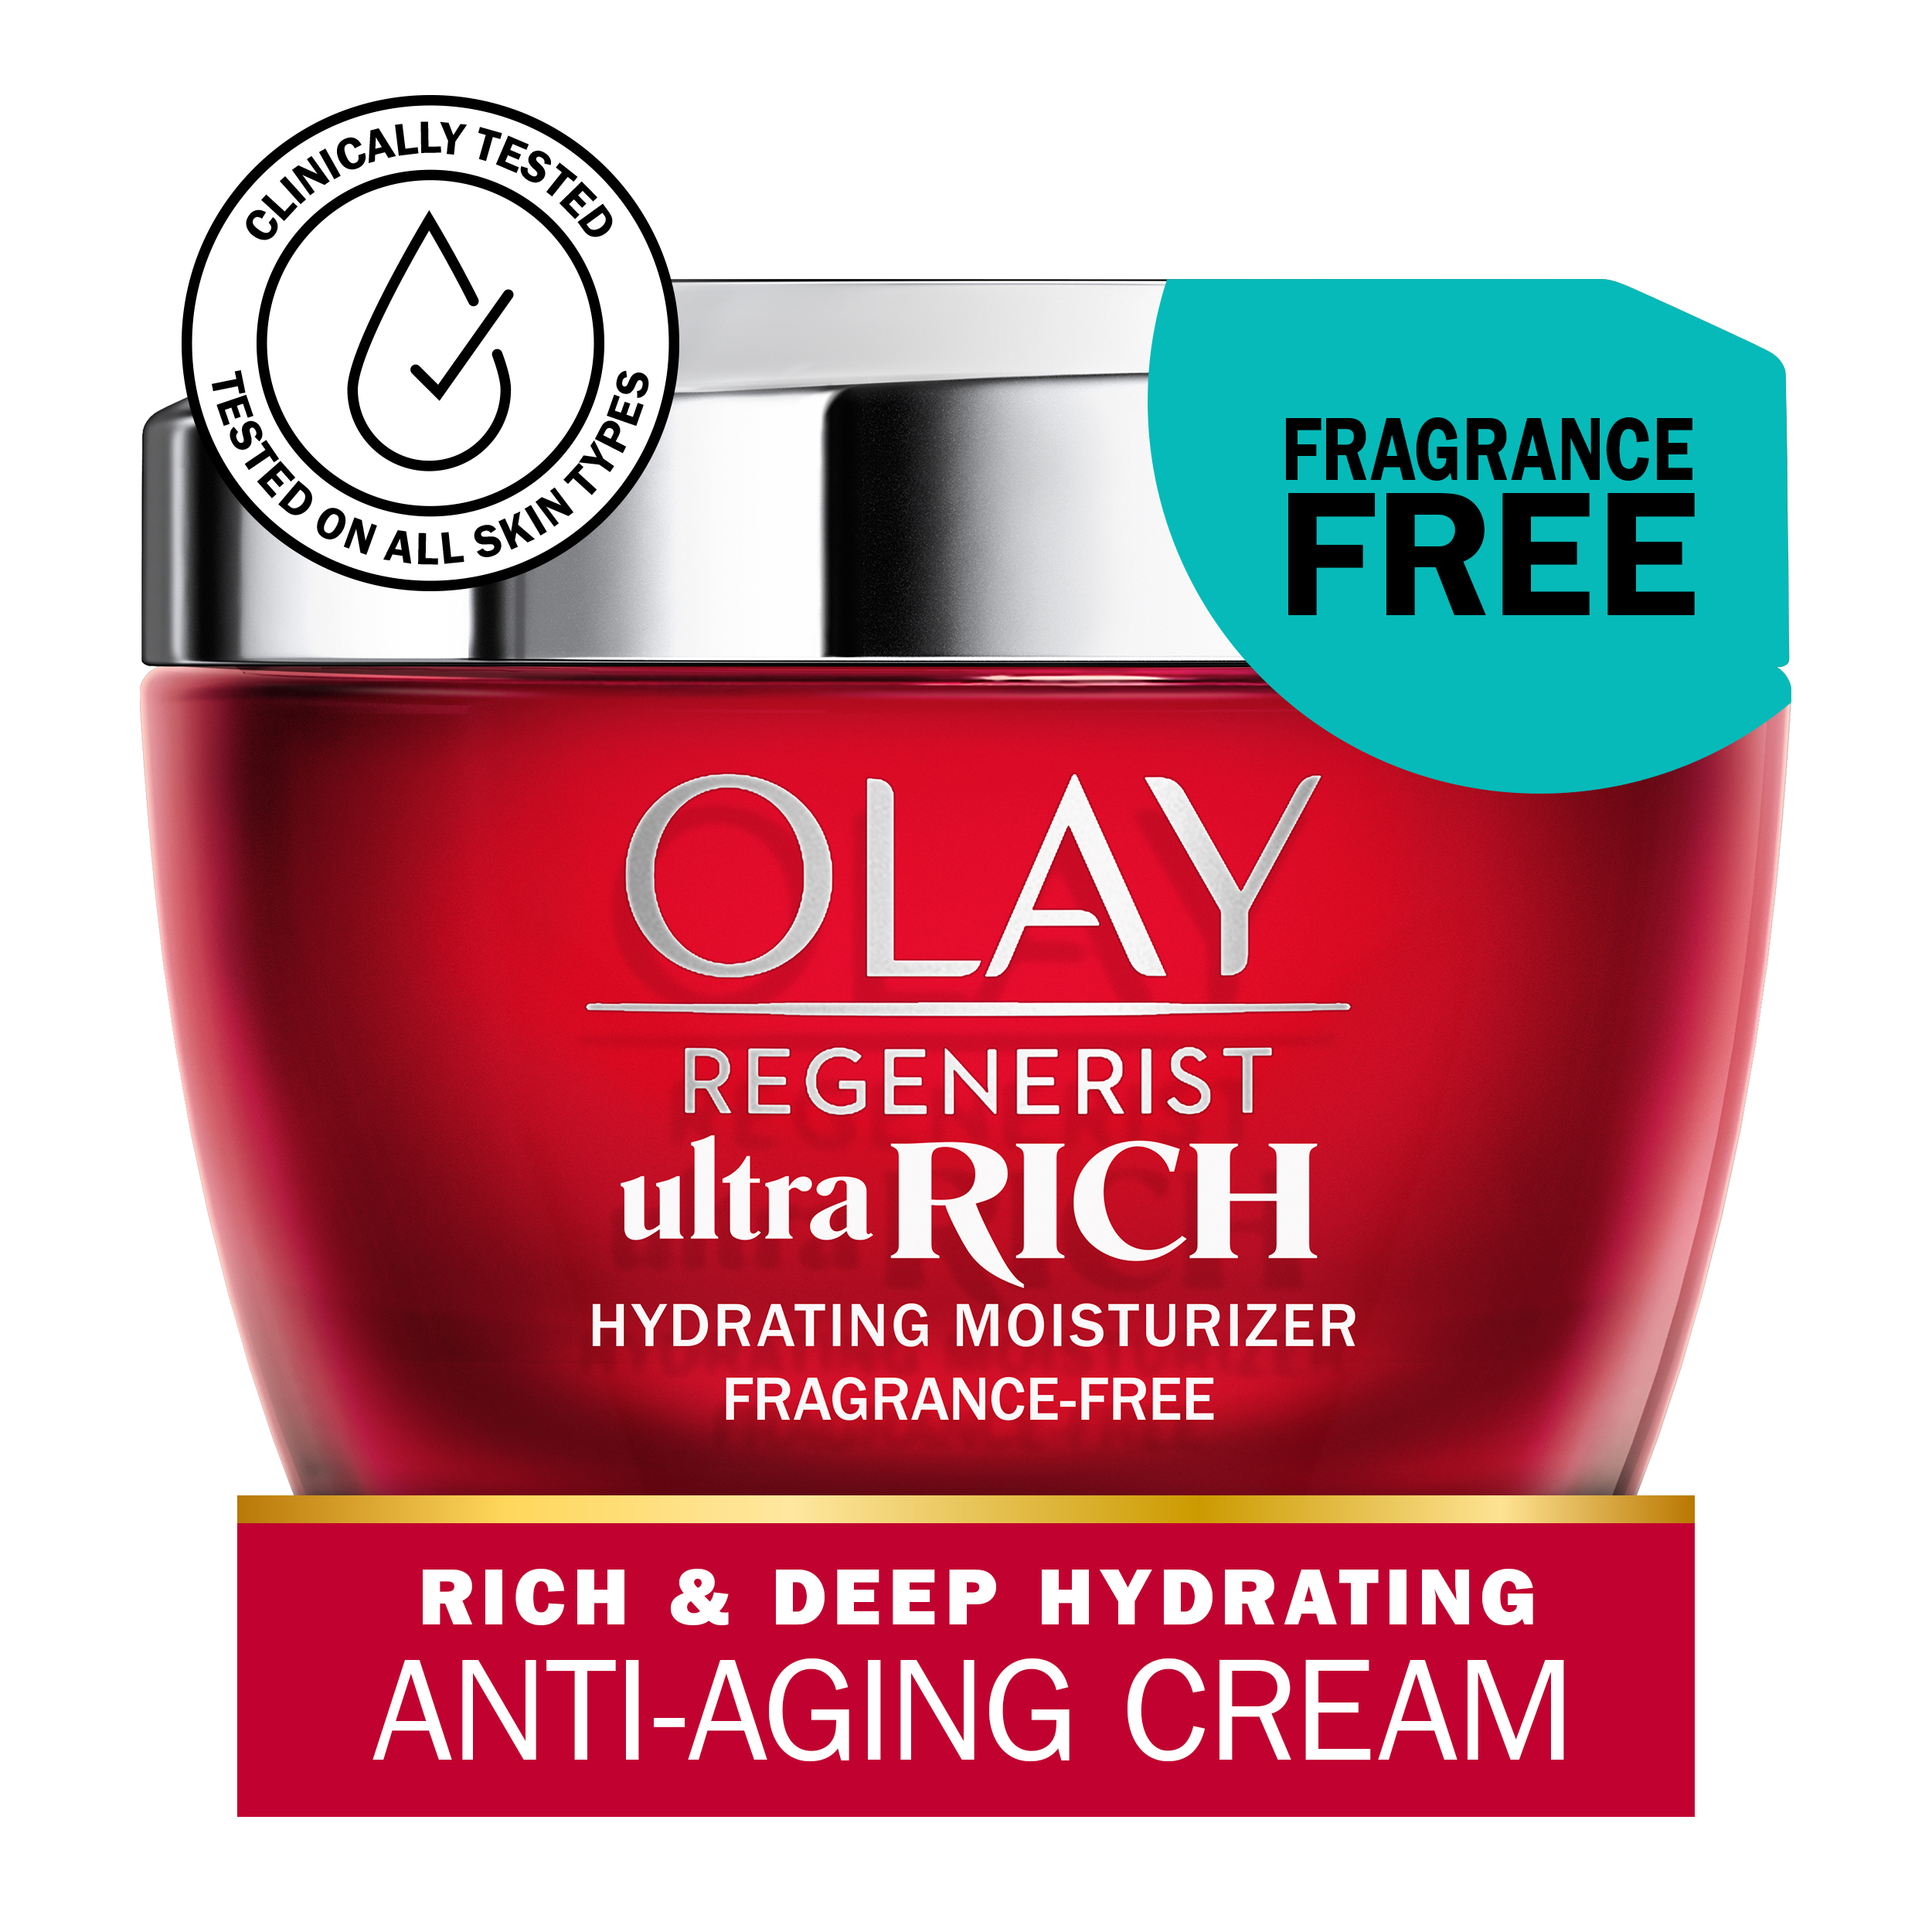 Olay Regenerist Ultra Rich Face Moisturizer, Fragrance-Free, Hydrates All Skin Dryness 1.7 Oz - image 1 of 8